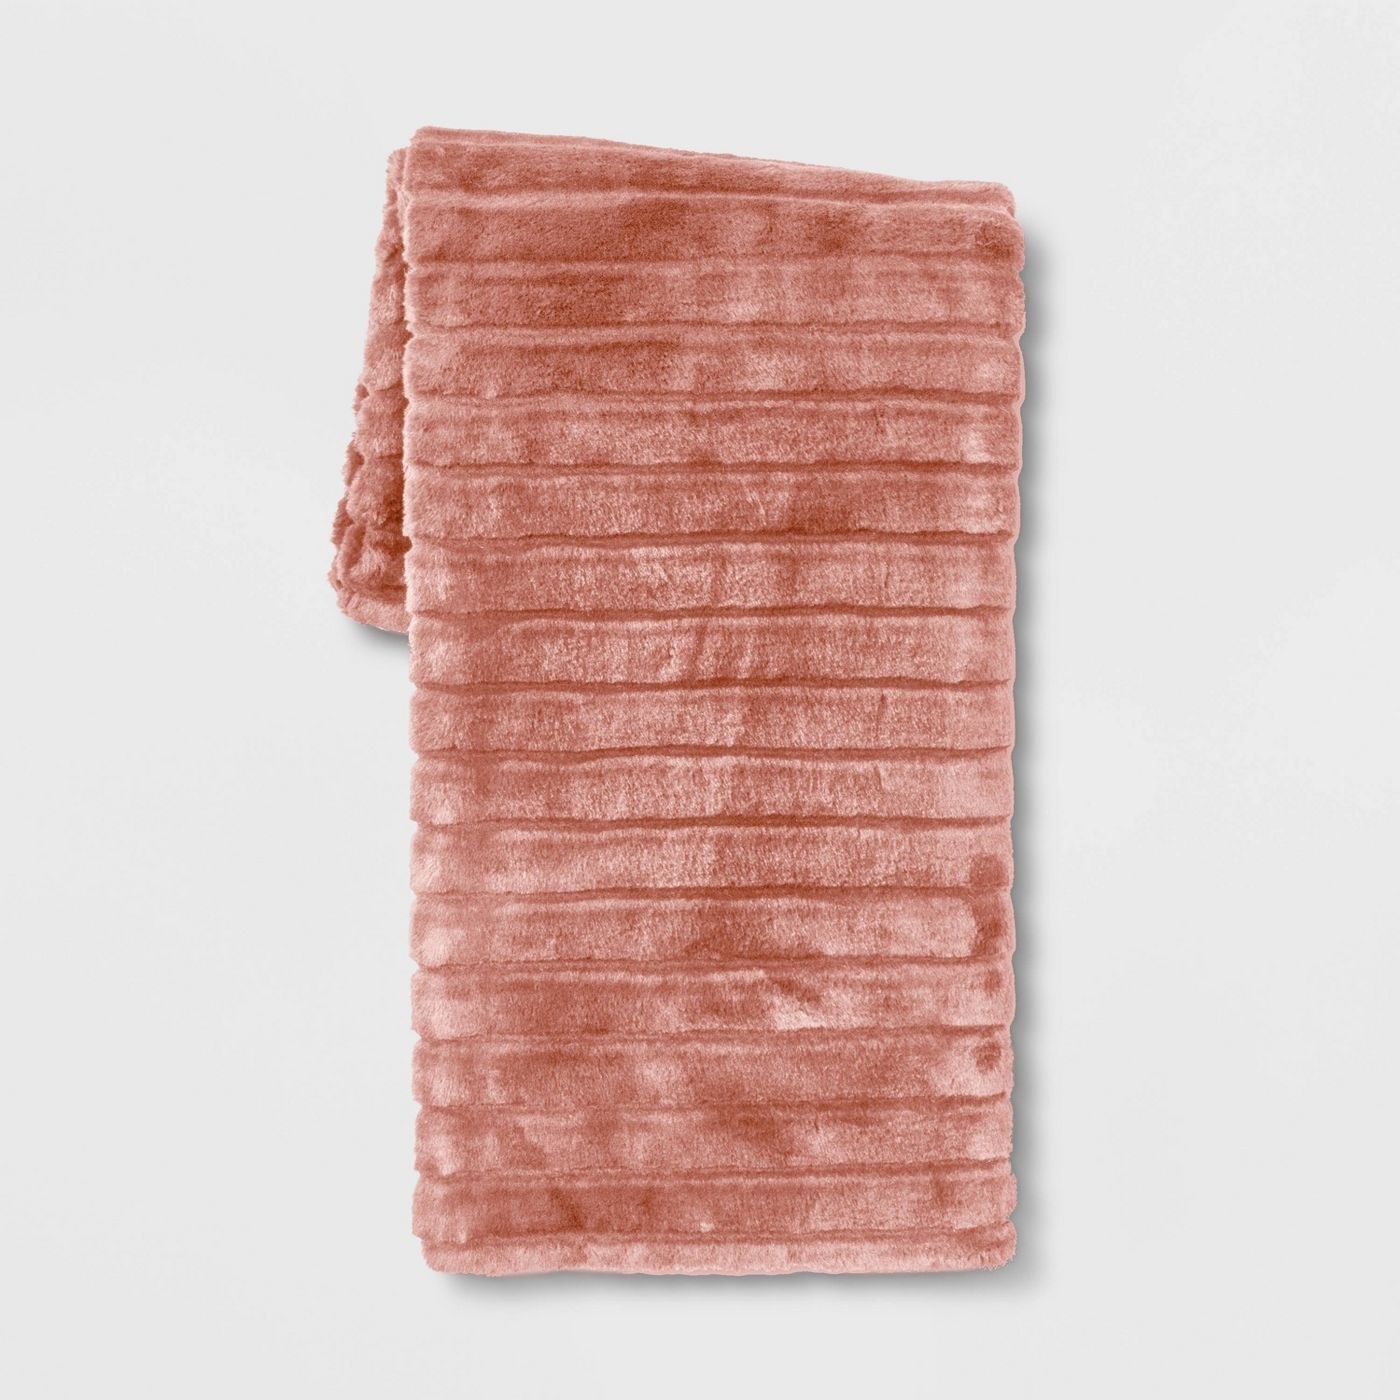 Pink textured faux fur blanket